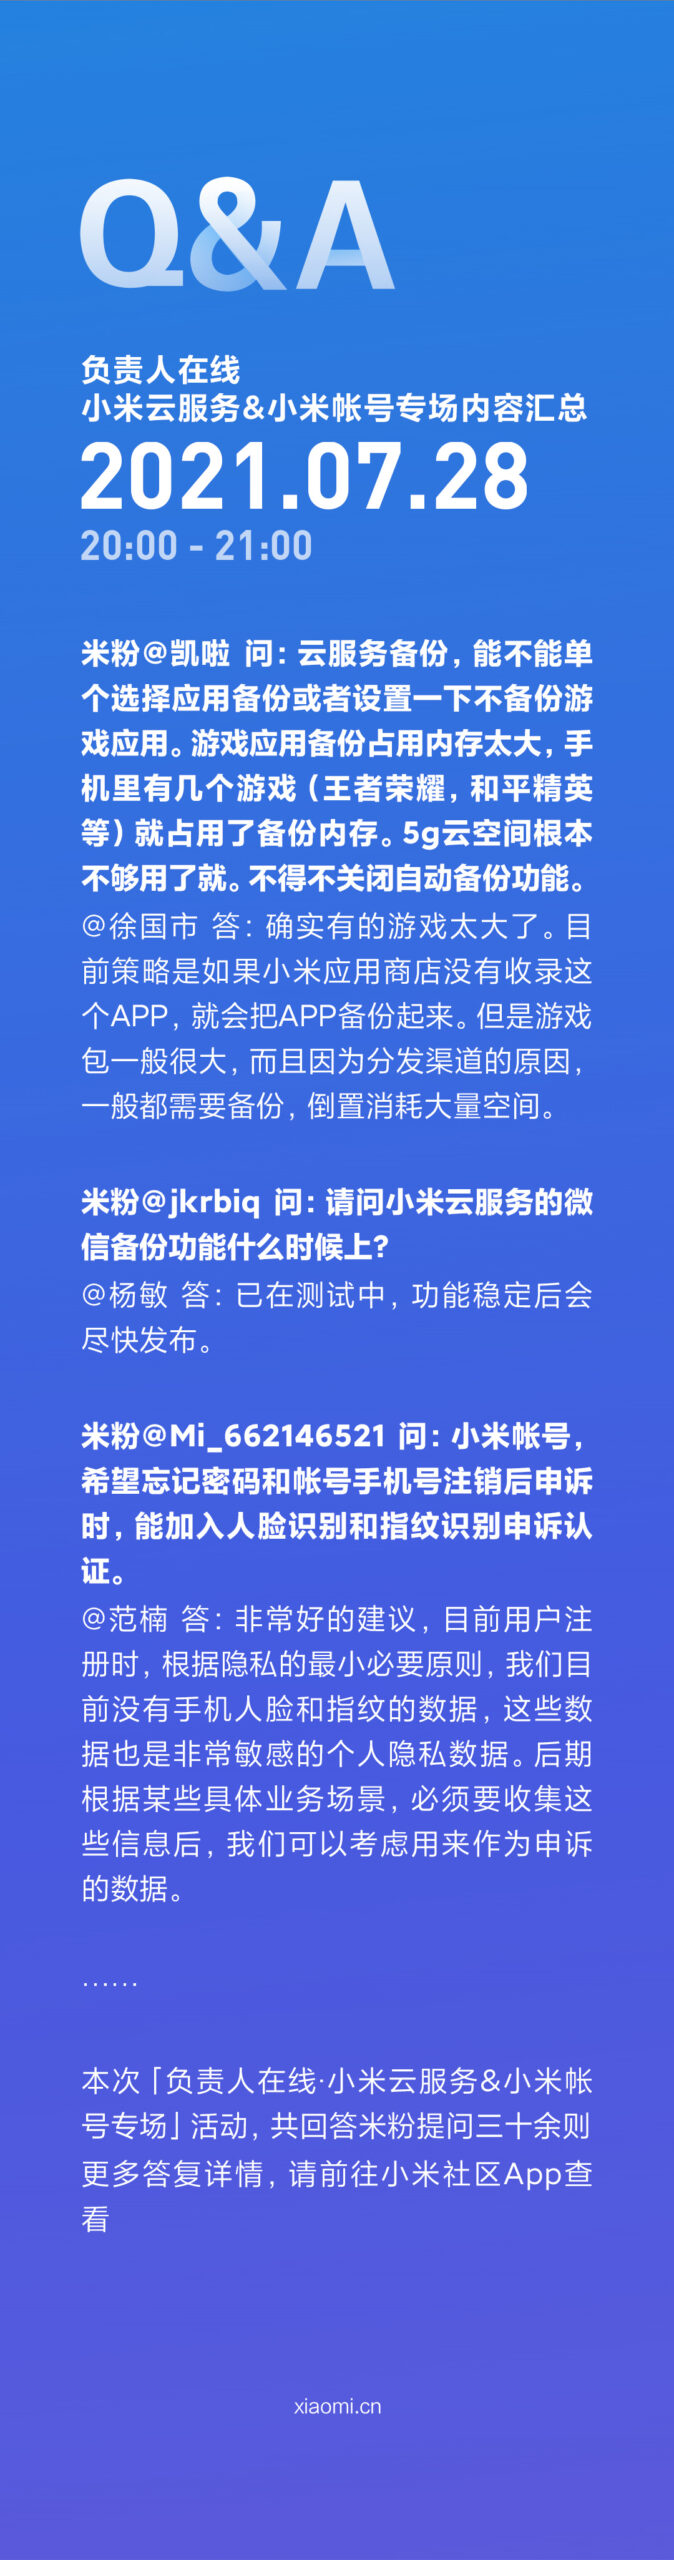 MIUI WeChat Data Cloud Backup